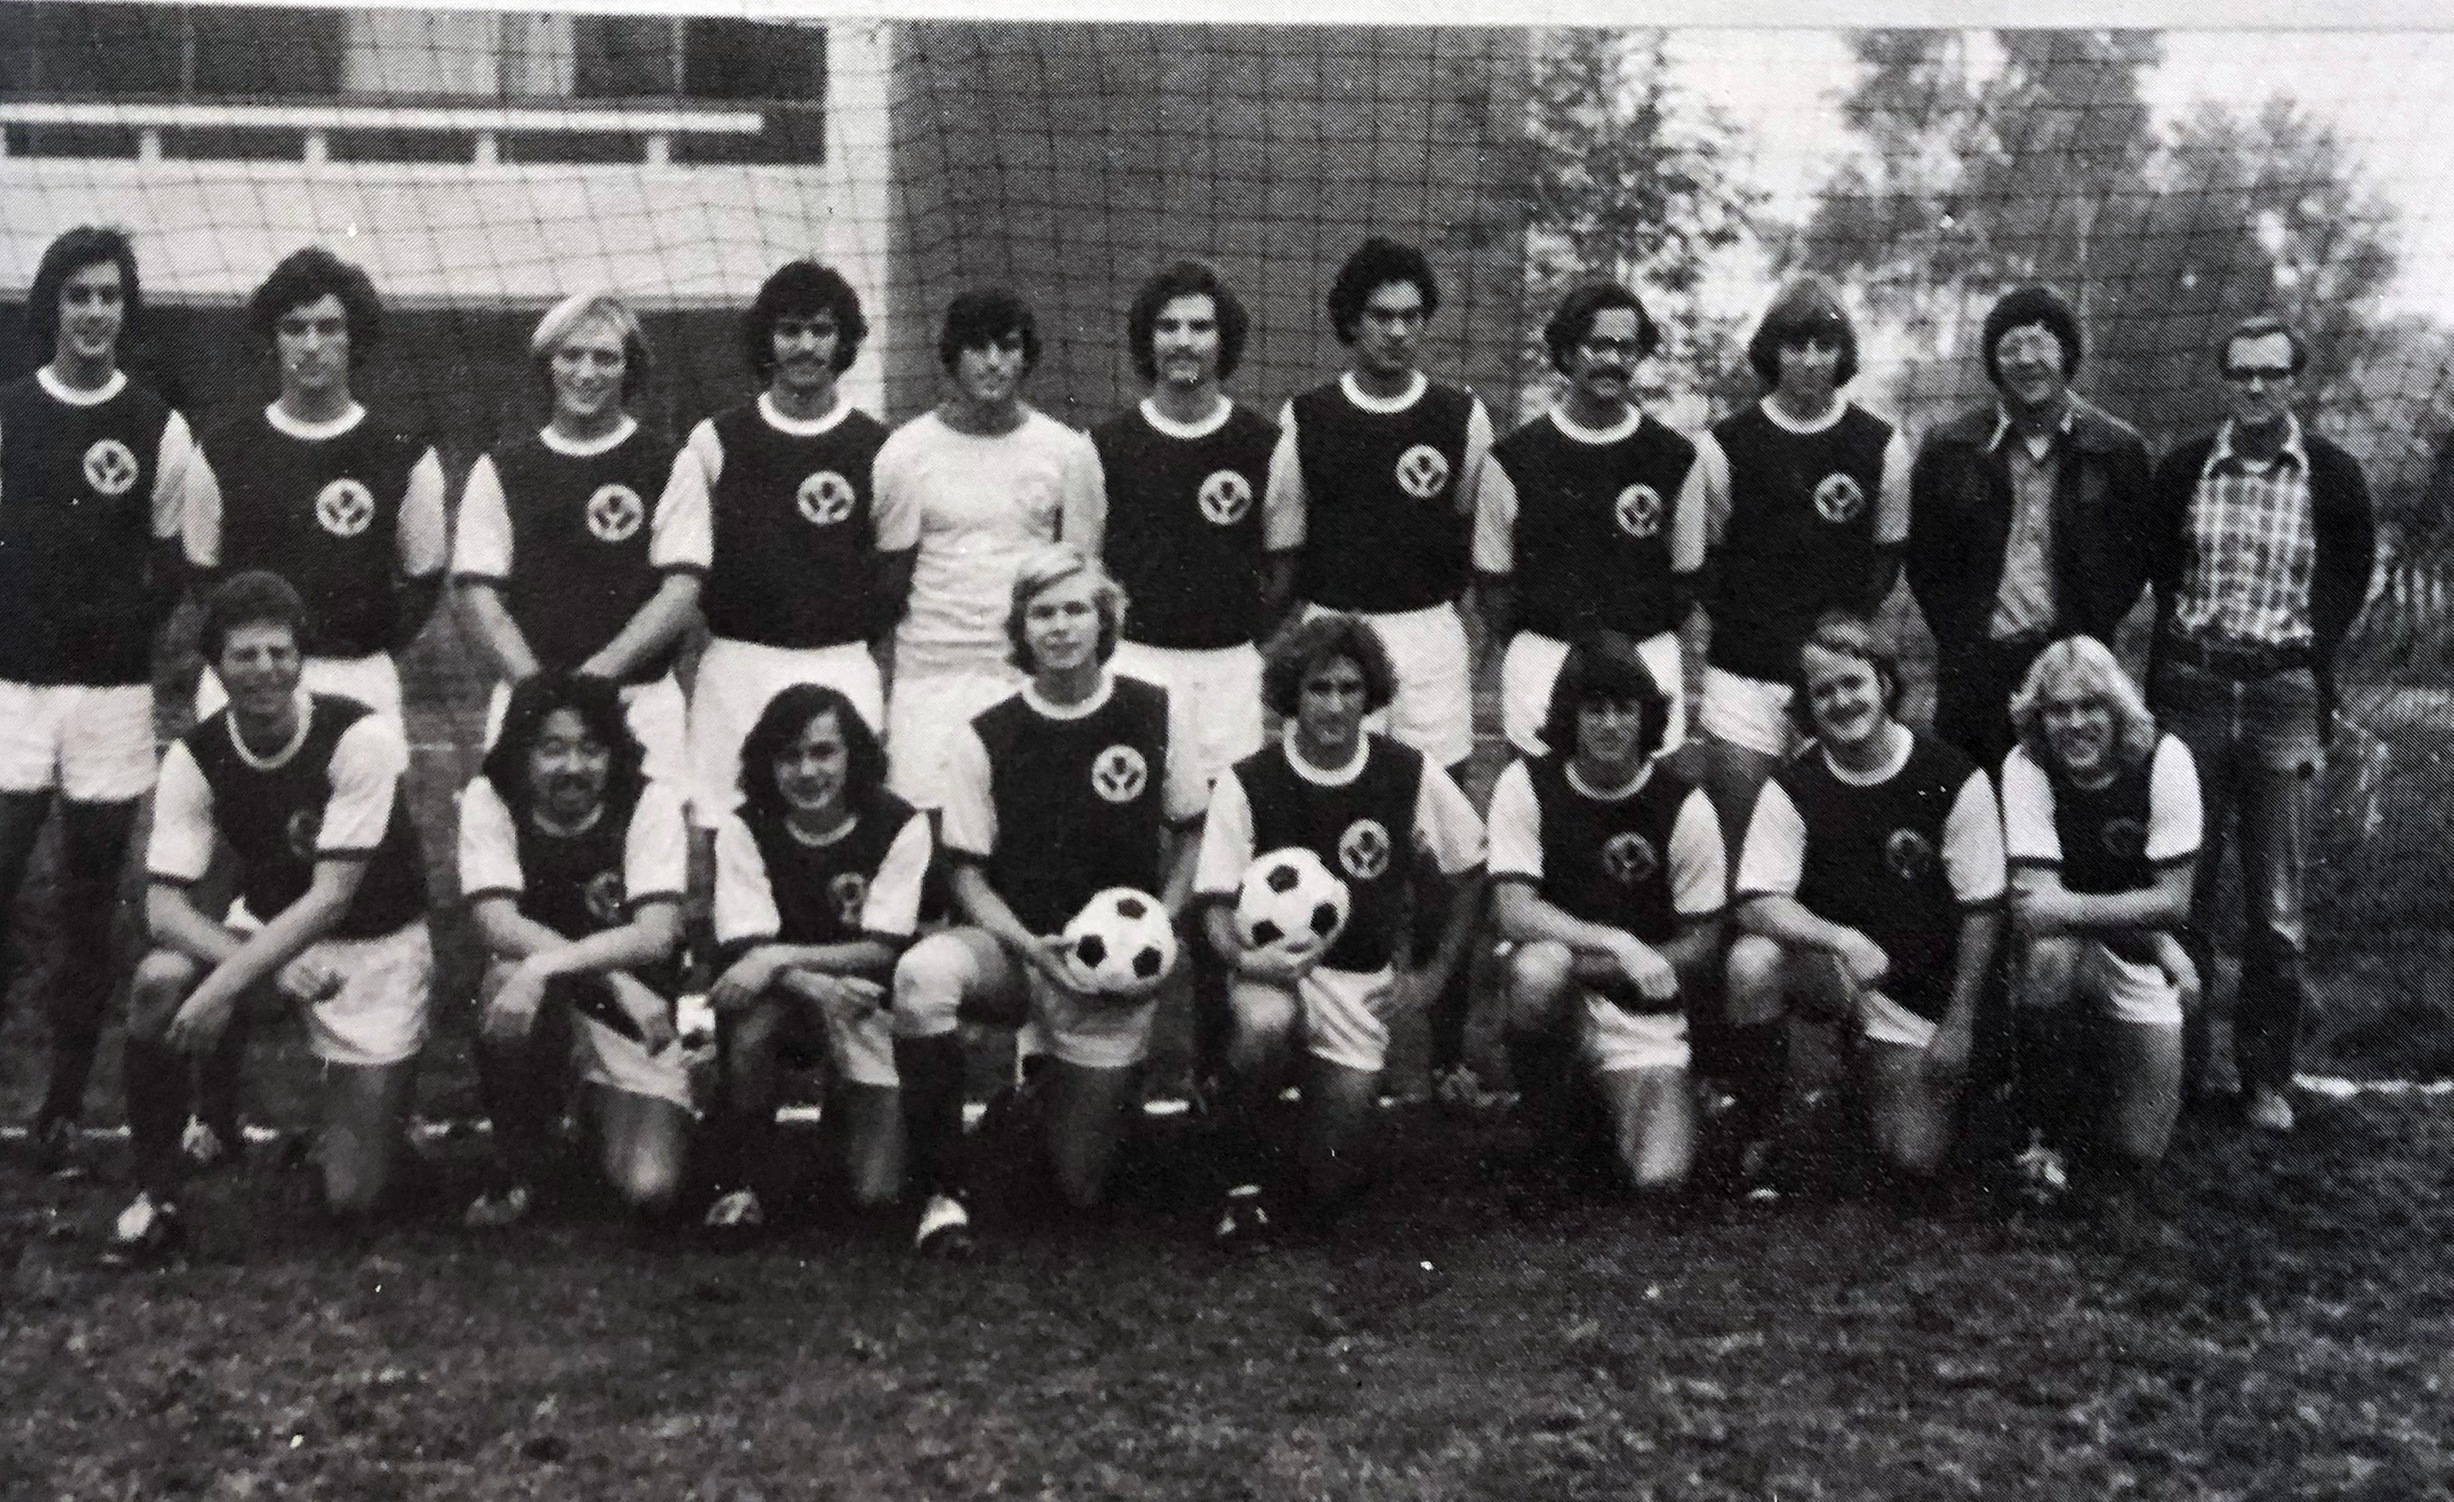 The 1974 team photo